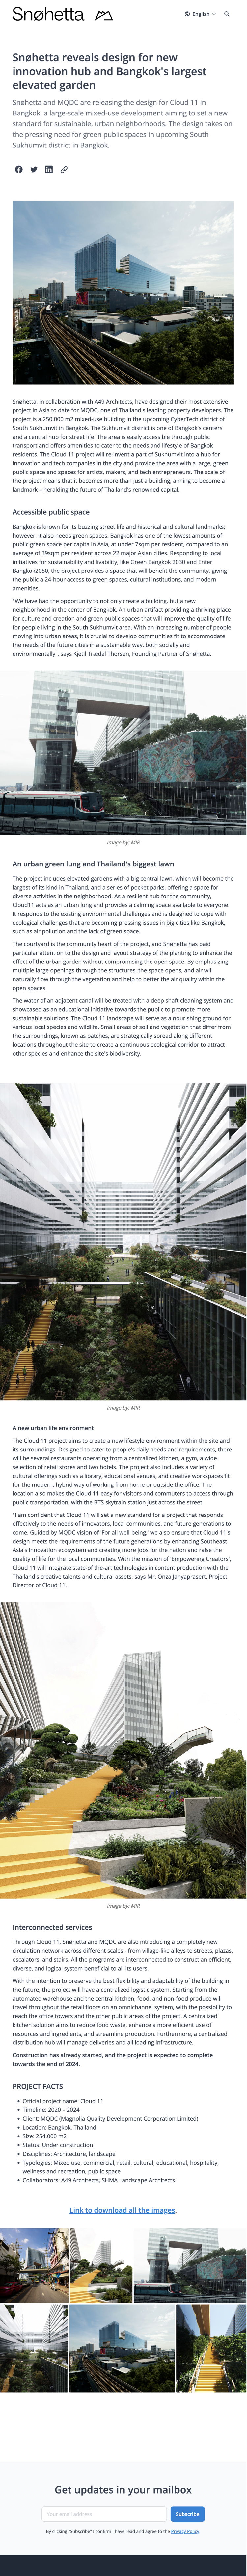 Snøhetta reveals design for new innovation hub and Bangkok's largest elevated garden